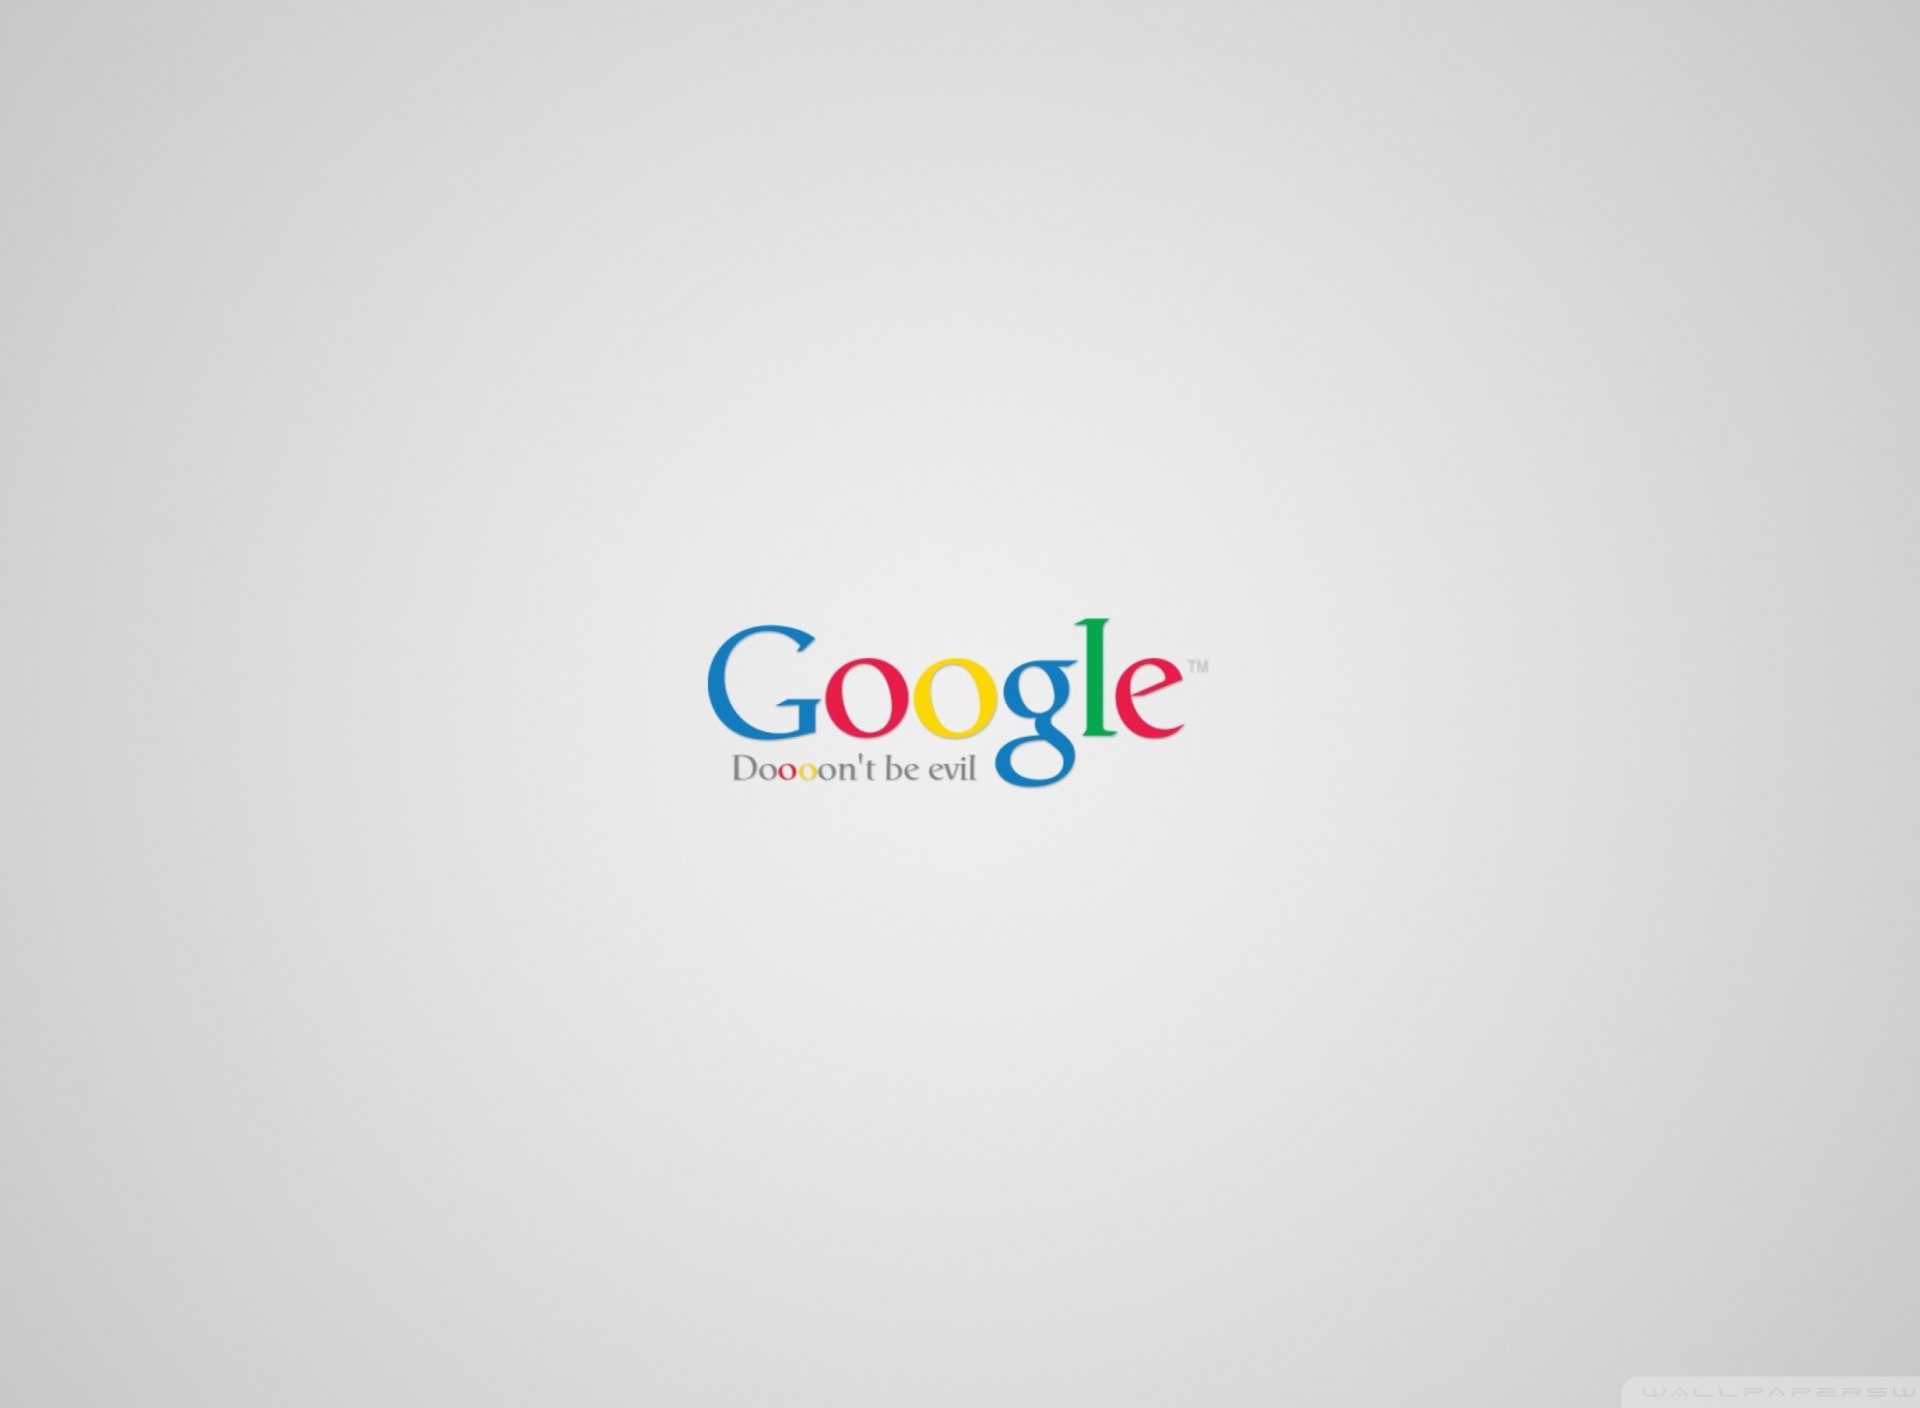 Google - Don't be evil wallpaper 1920x1408